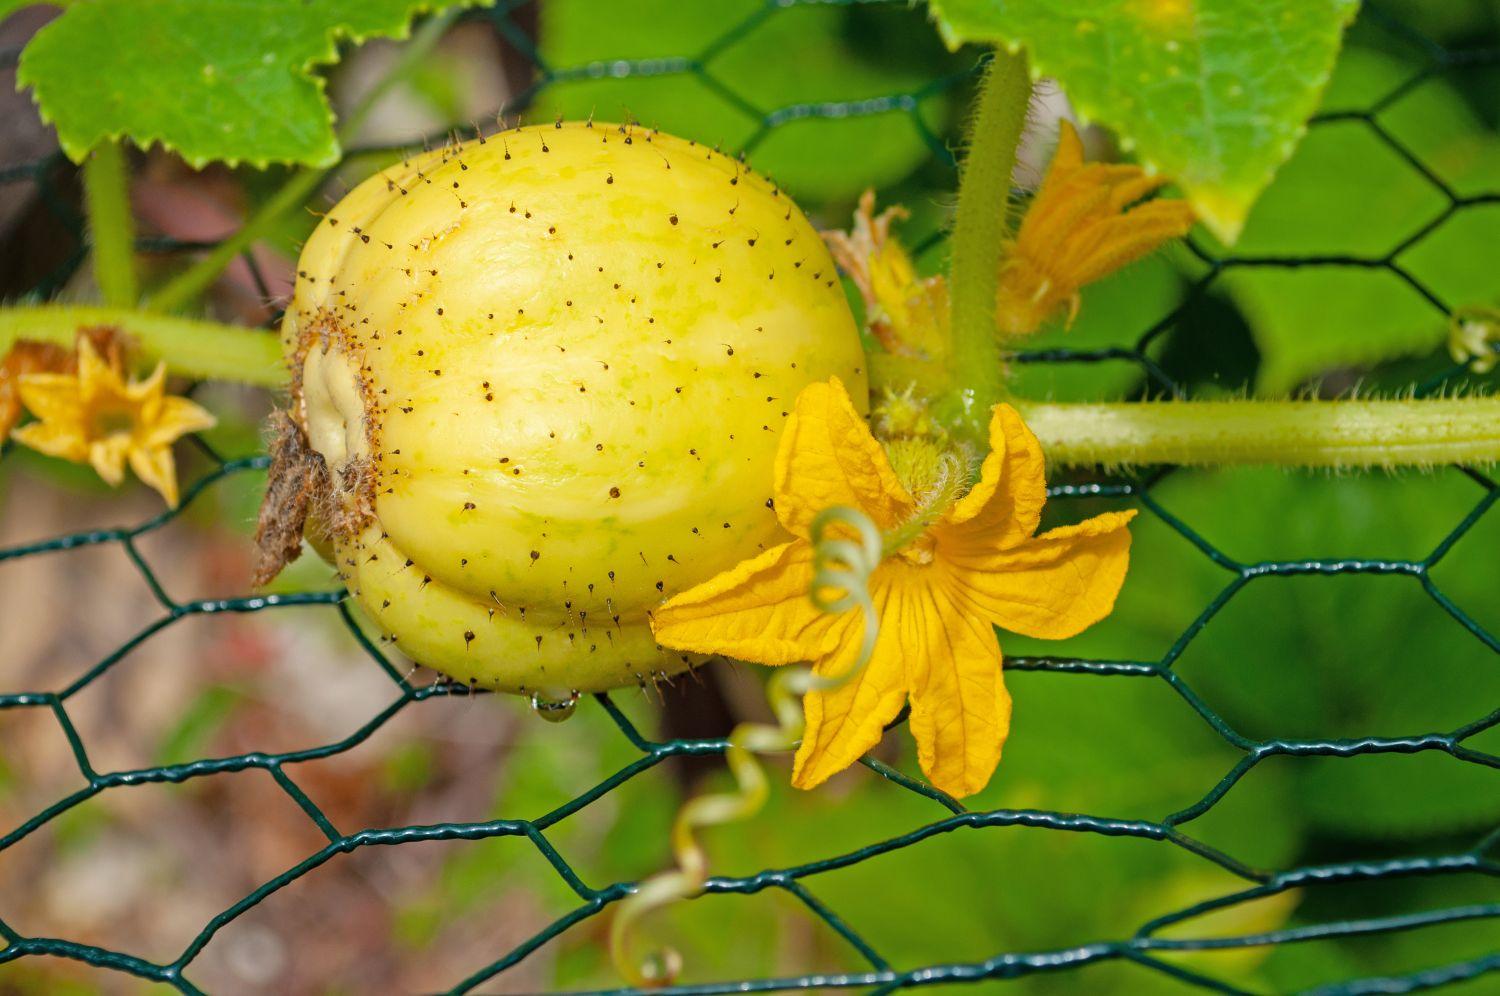 Yellow lemon cucumber on plant